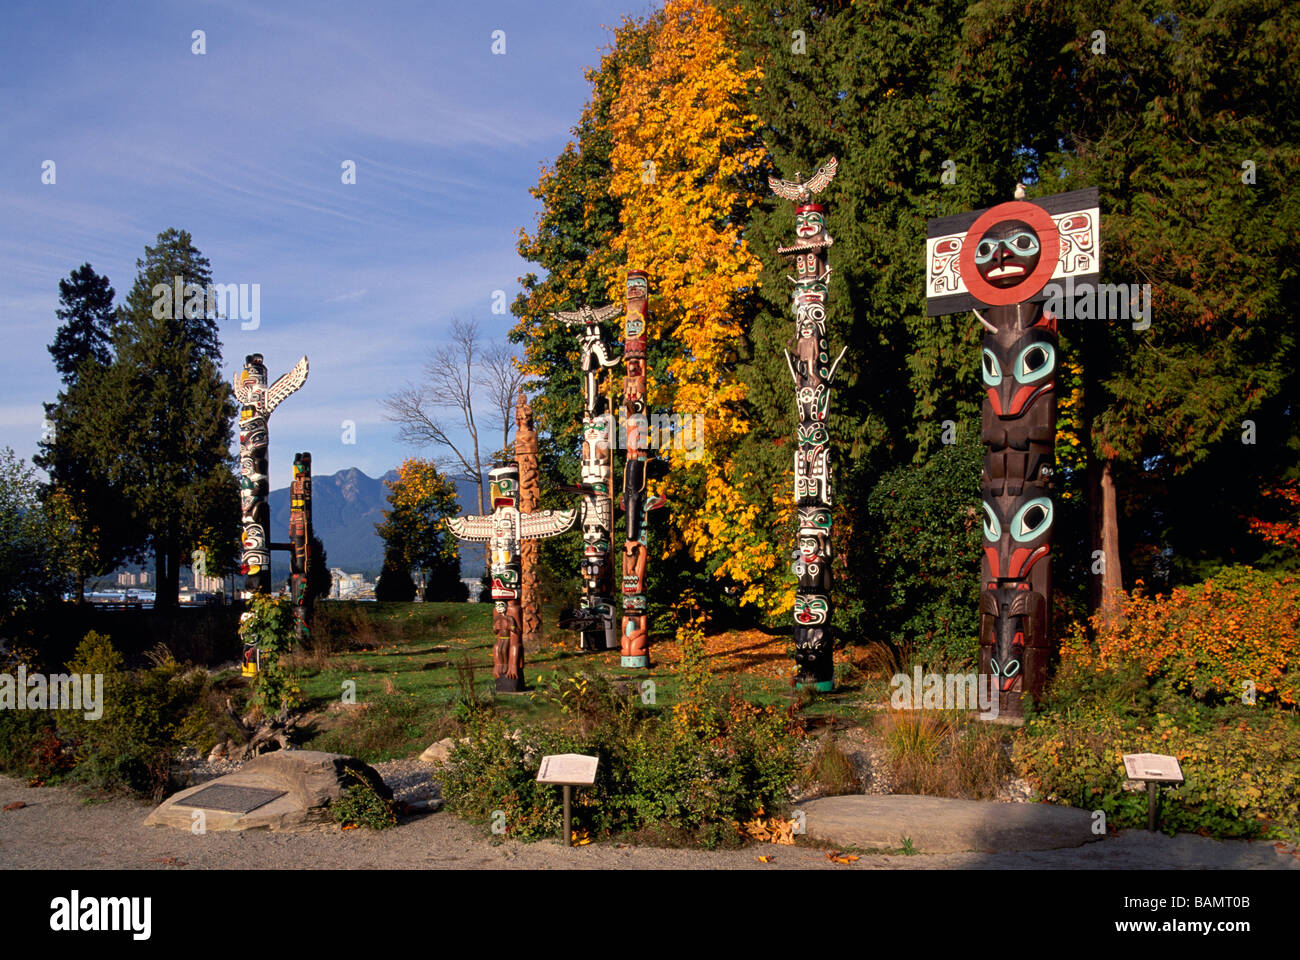 Stanley Park Totempfähle am Brockton Point, Vancouver, BC, Britisch-Kolumbien, Kanada - Herbst / Herbst Stockfoto